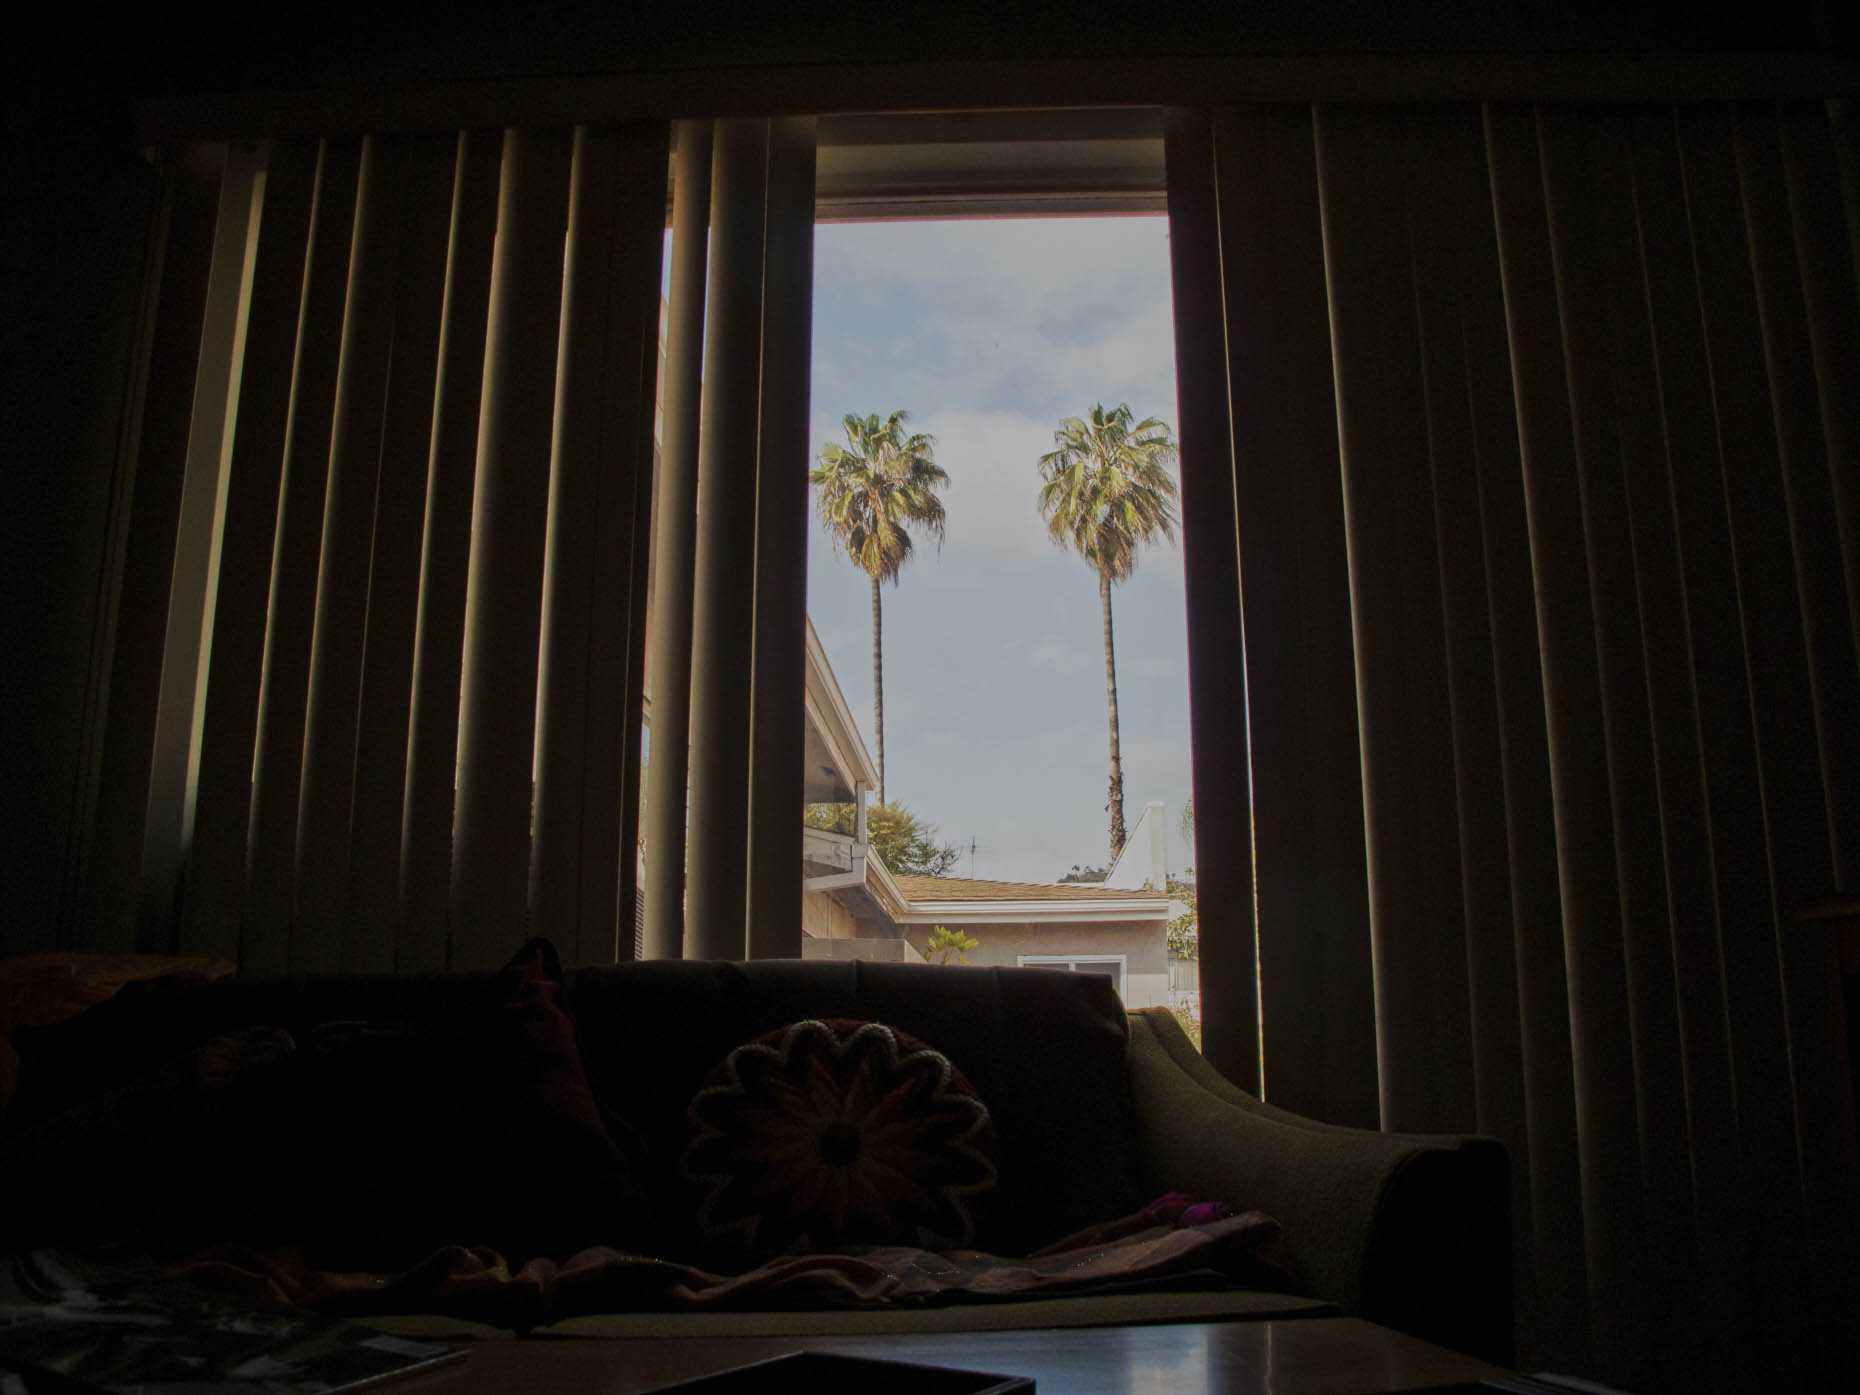 L.A. Prentice window plam trees